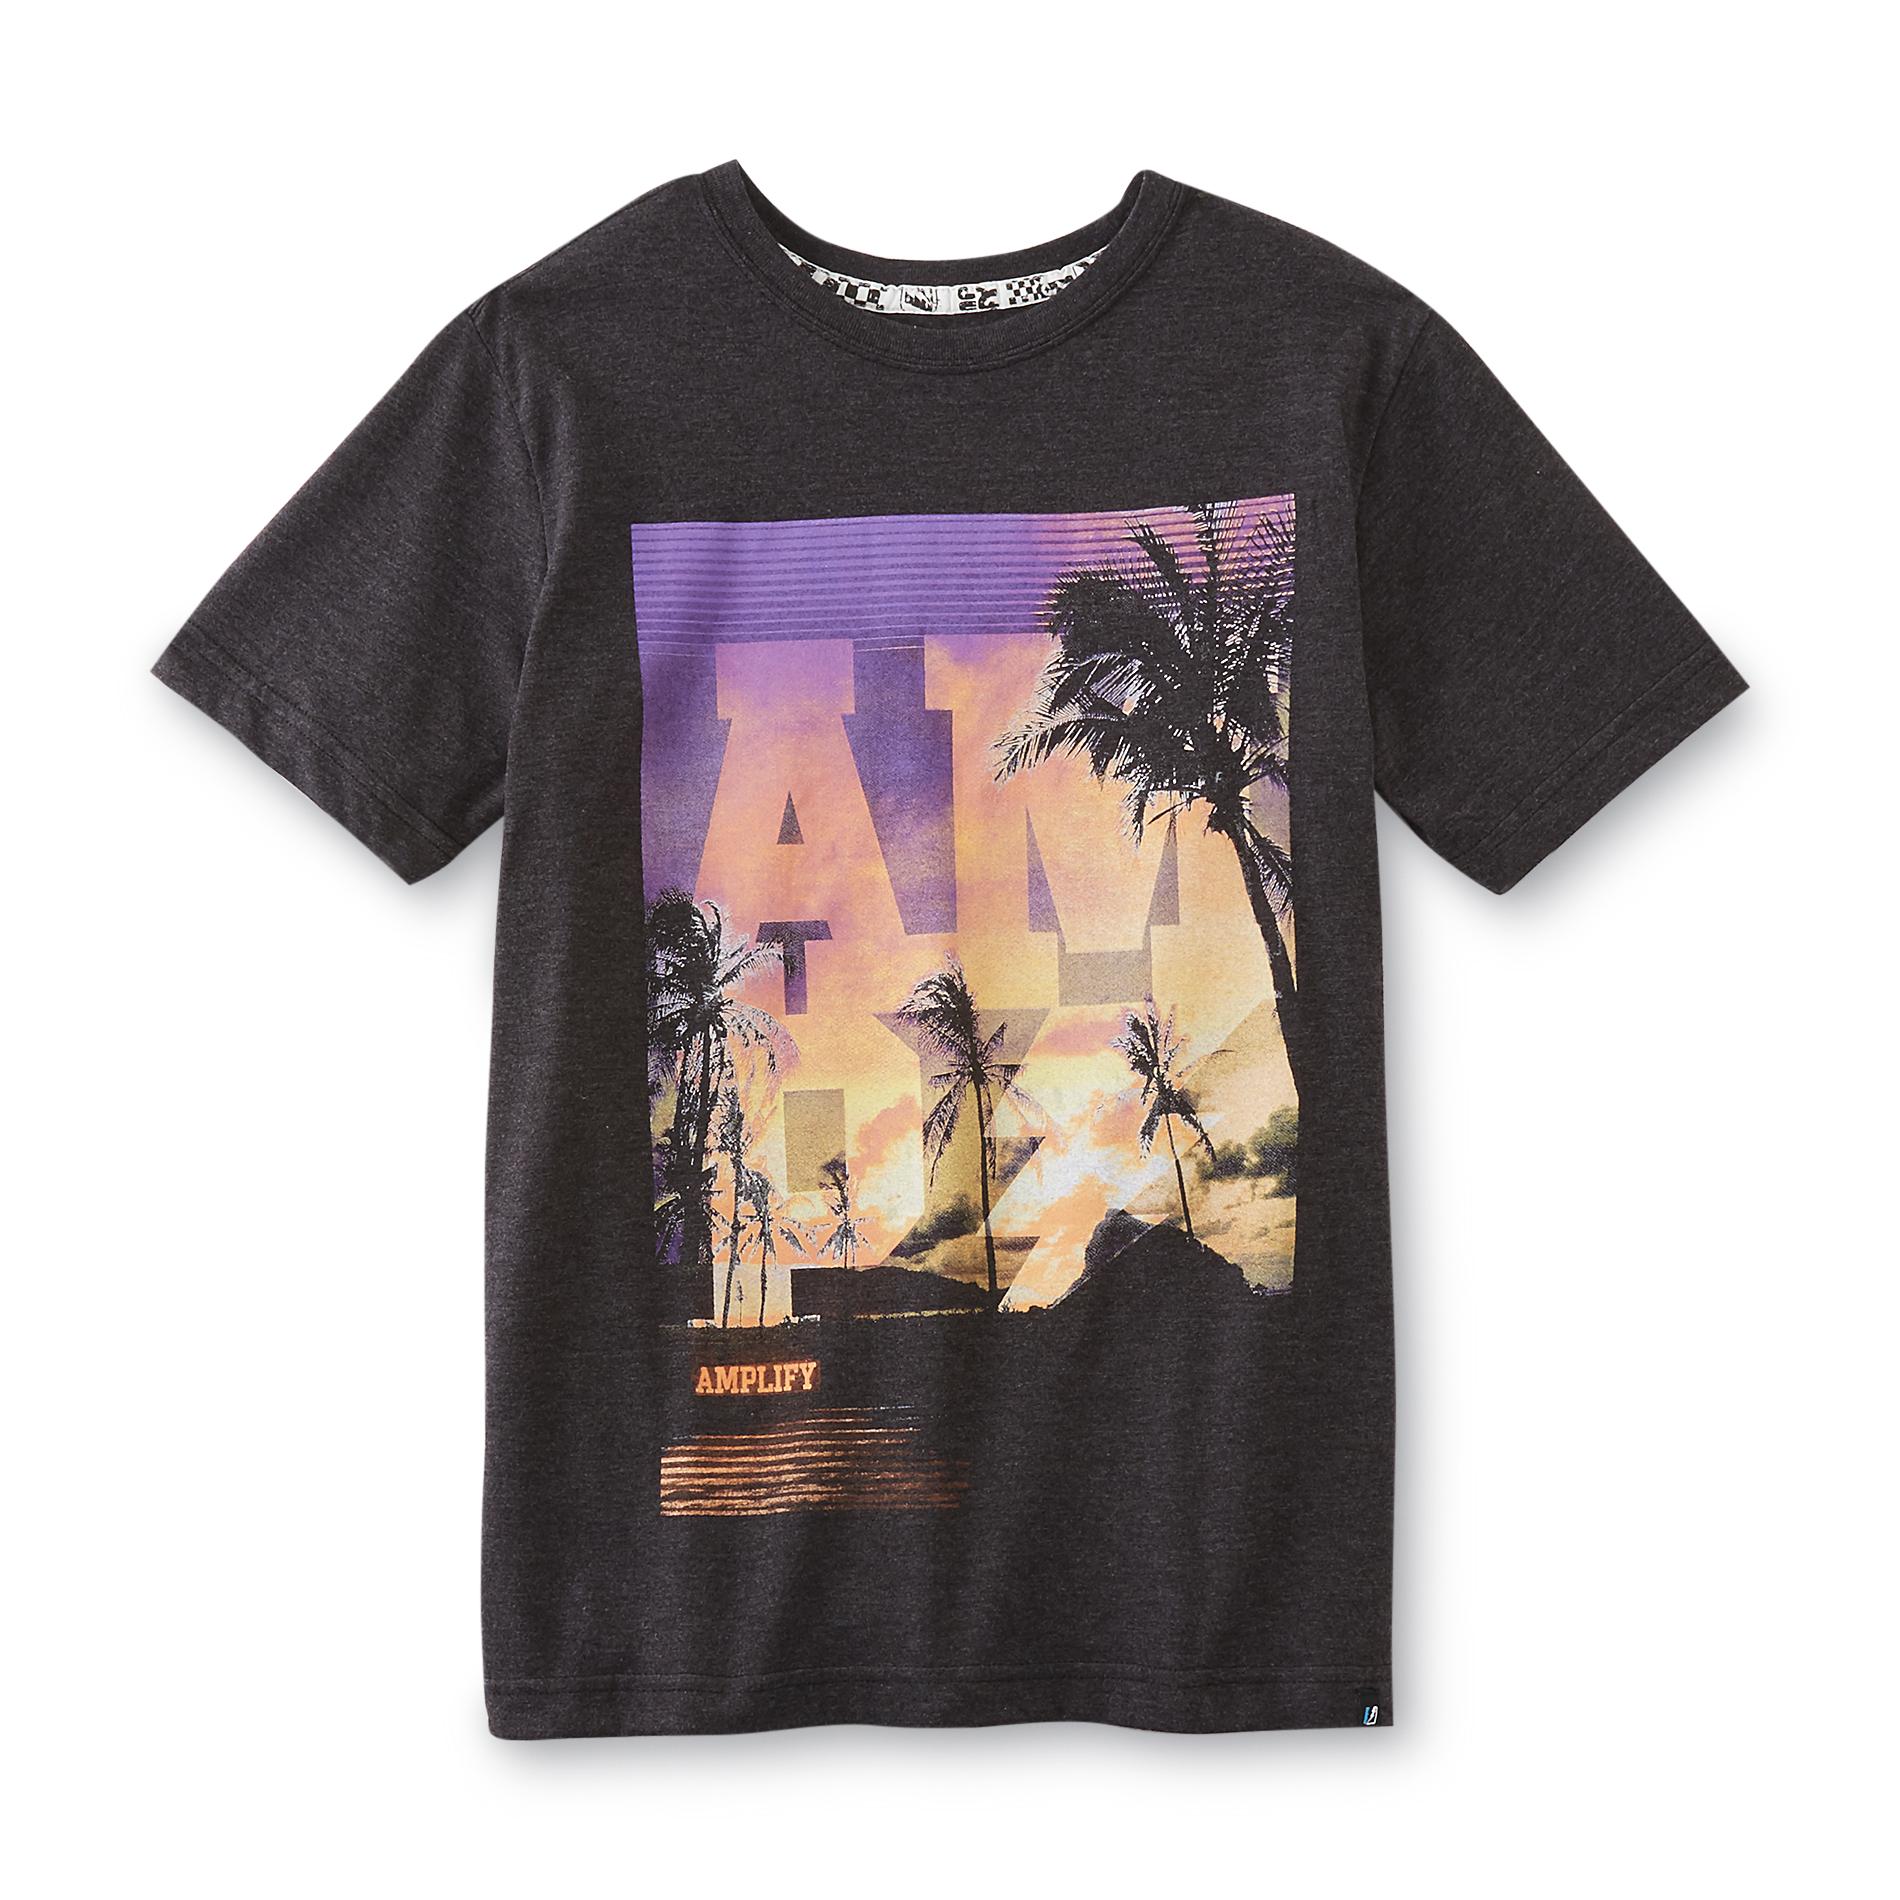 Amplify Boy's Graphic T-Shirt - Beach